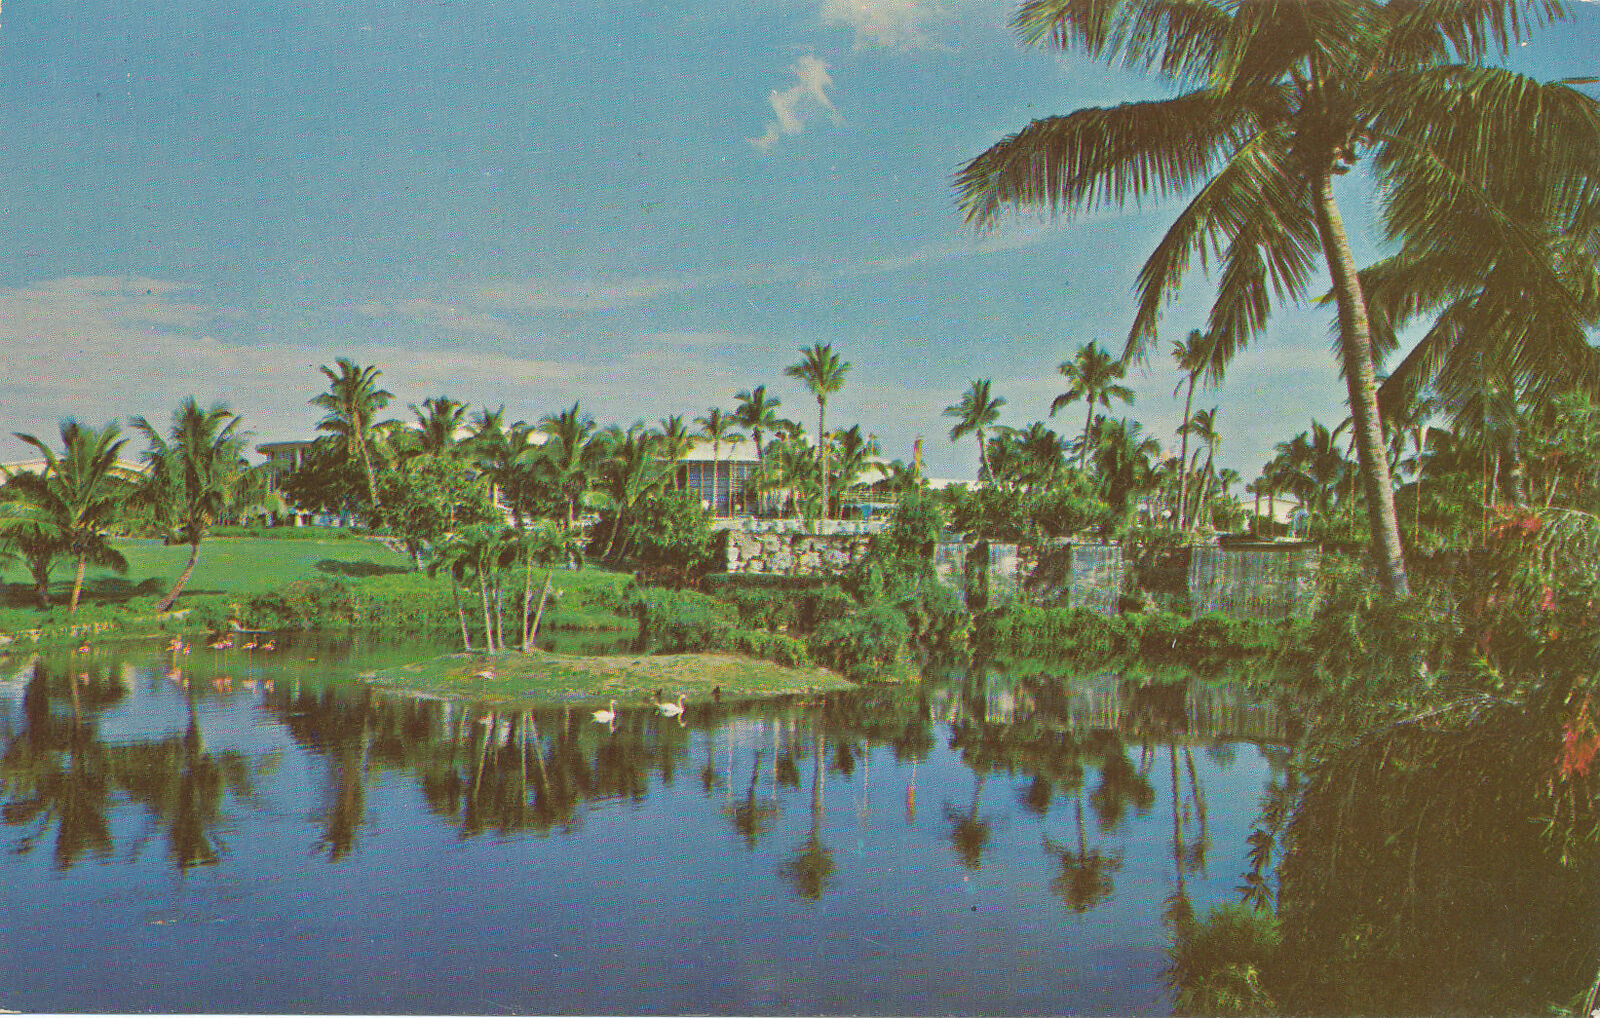 DORAL COUNTRY CLUB - FLAMINGO LAKE - unused chrome postcard